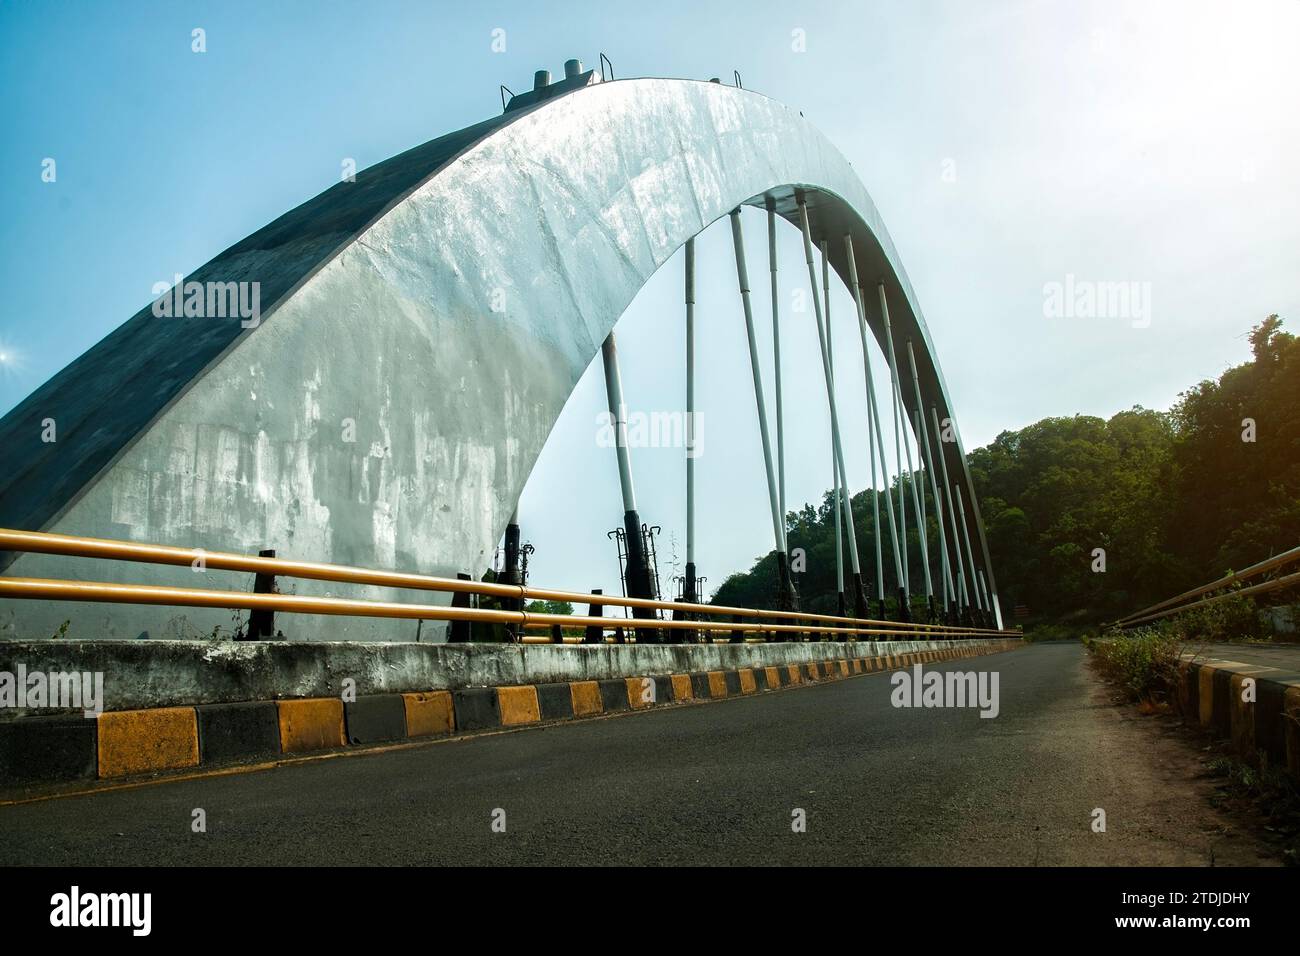 Bajulmati bridge with suspension made of concrete and metal pillars Stock Photo